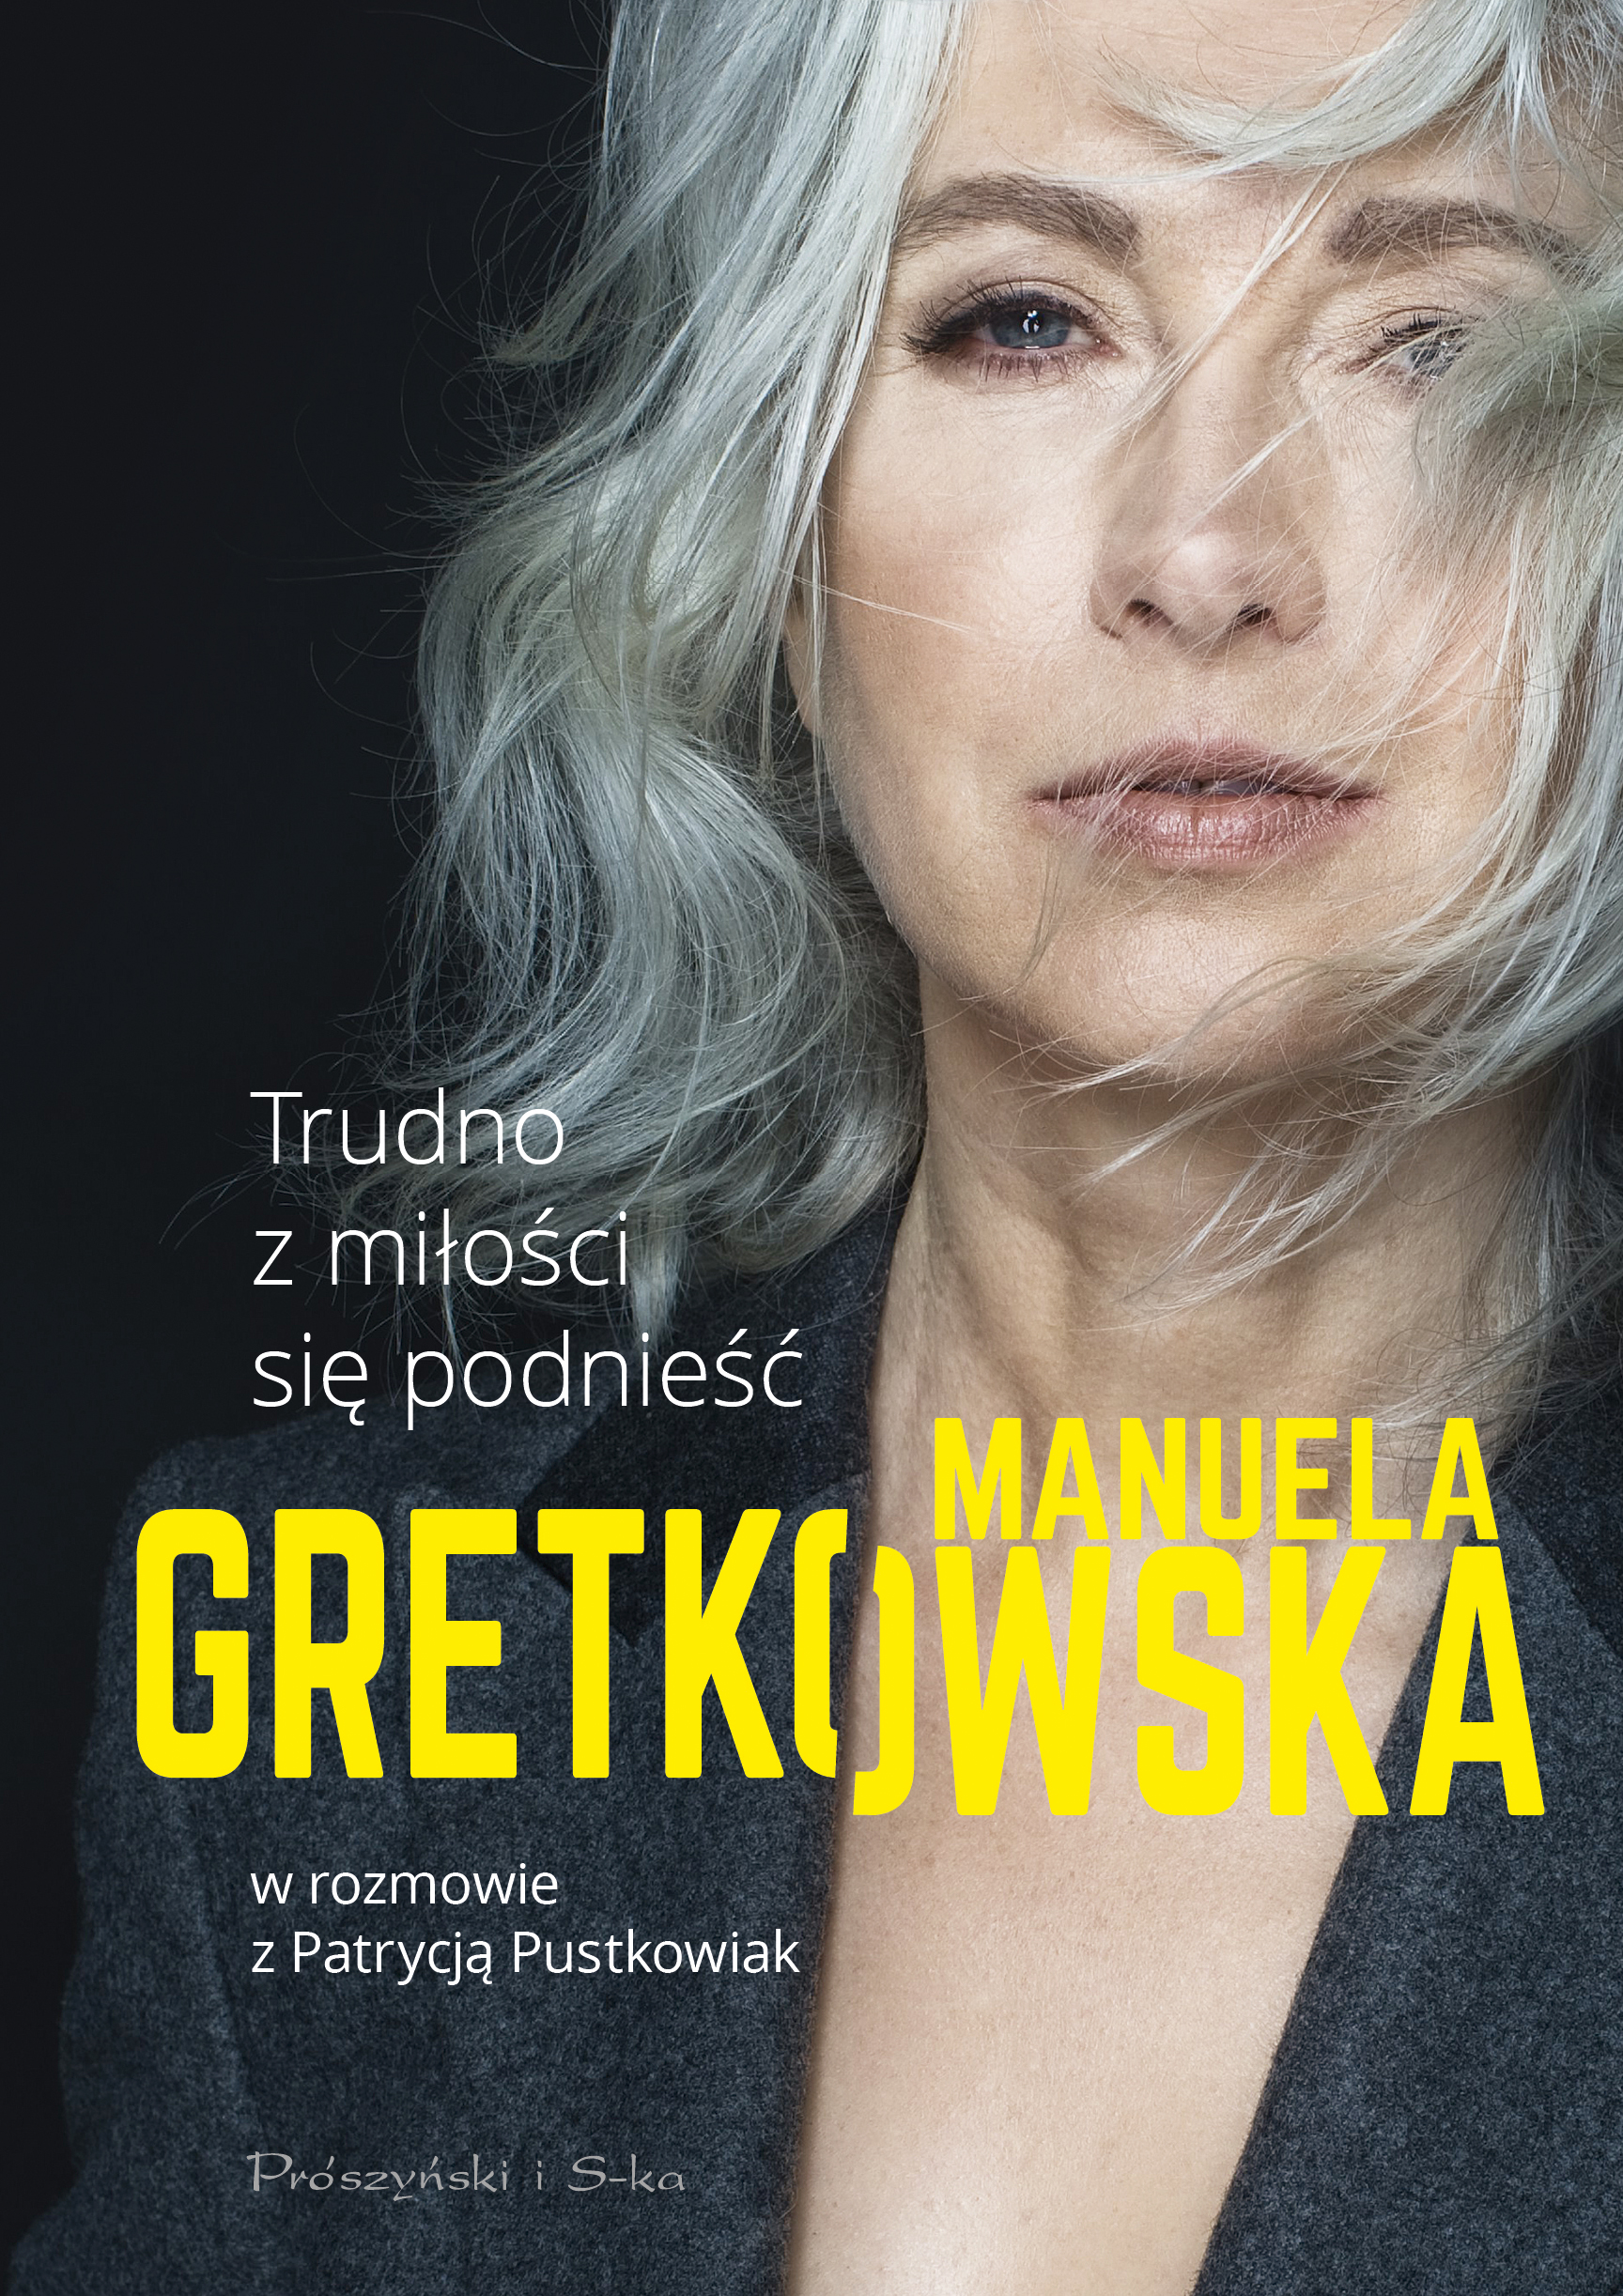 Manuela Gretkowska - 